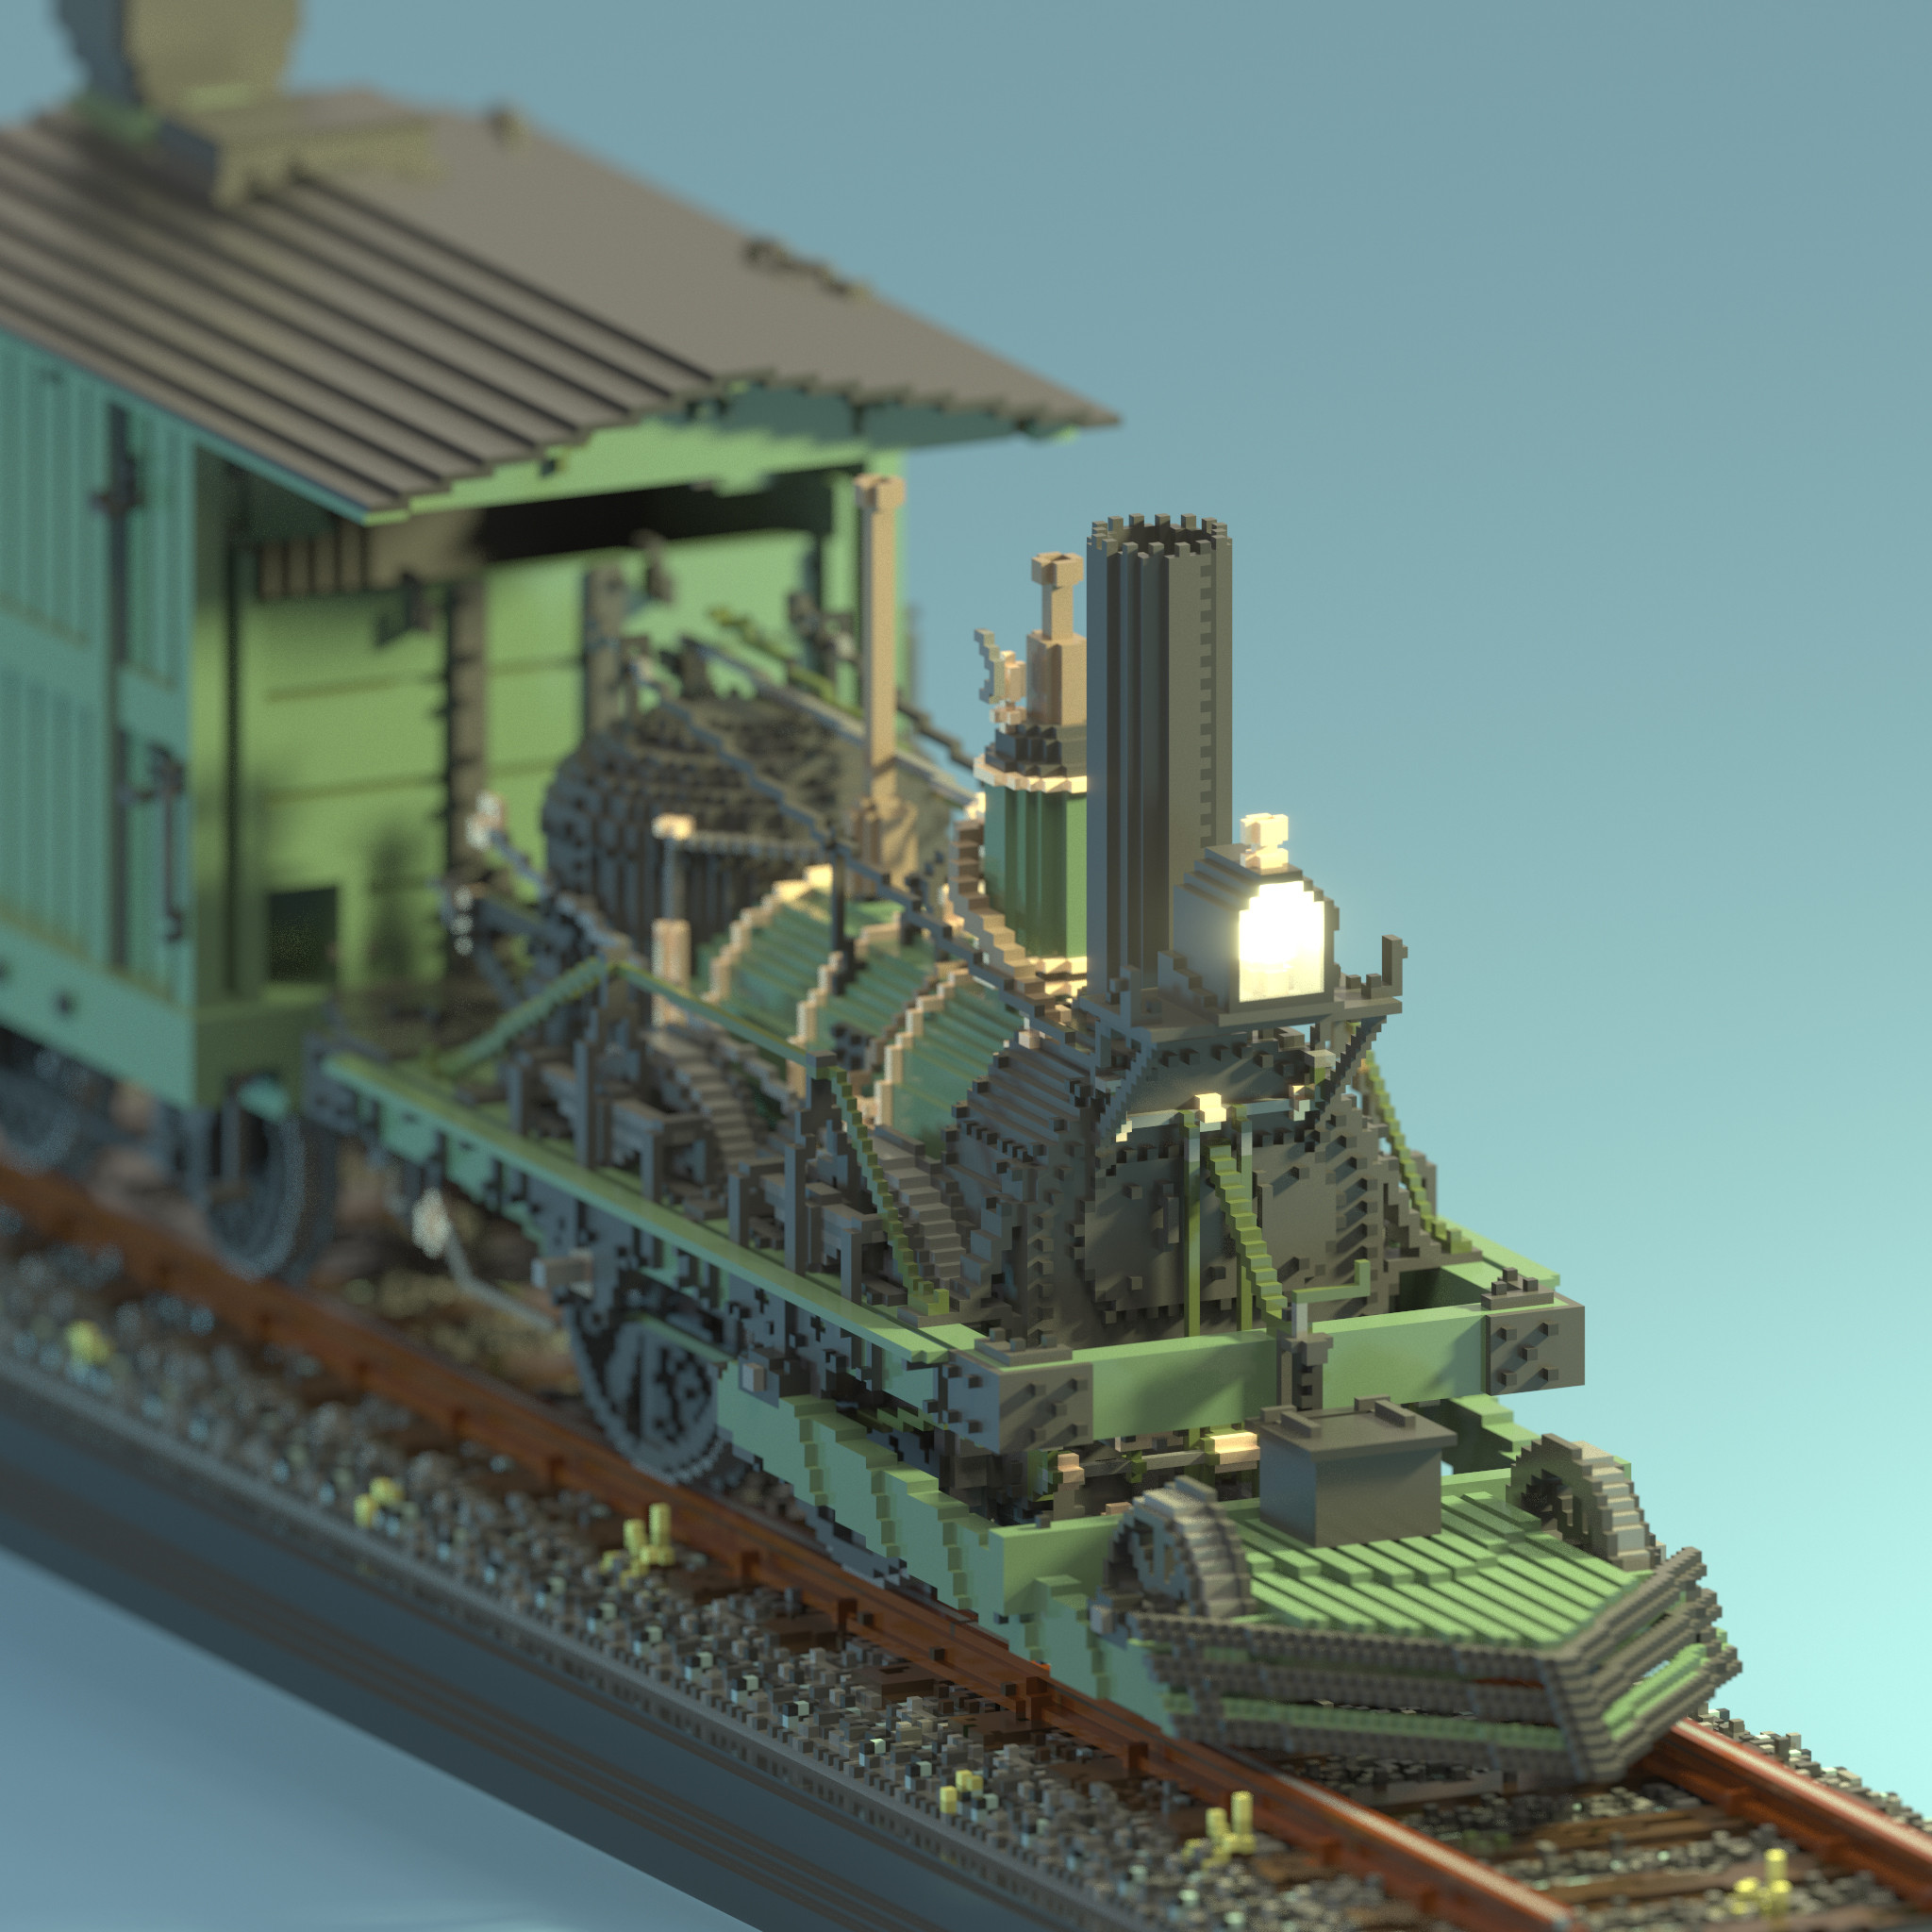 Overhead render of the John Bull , focusing on the locomotive's details.